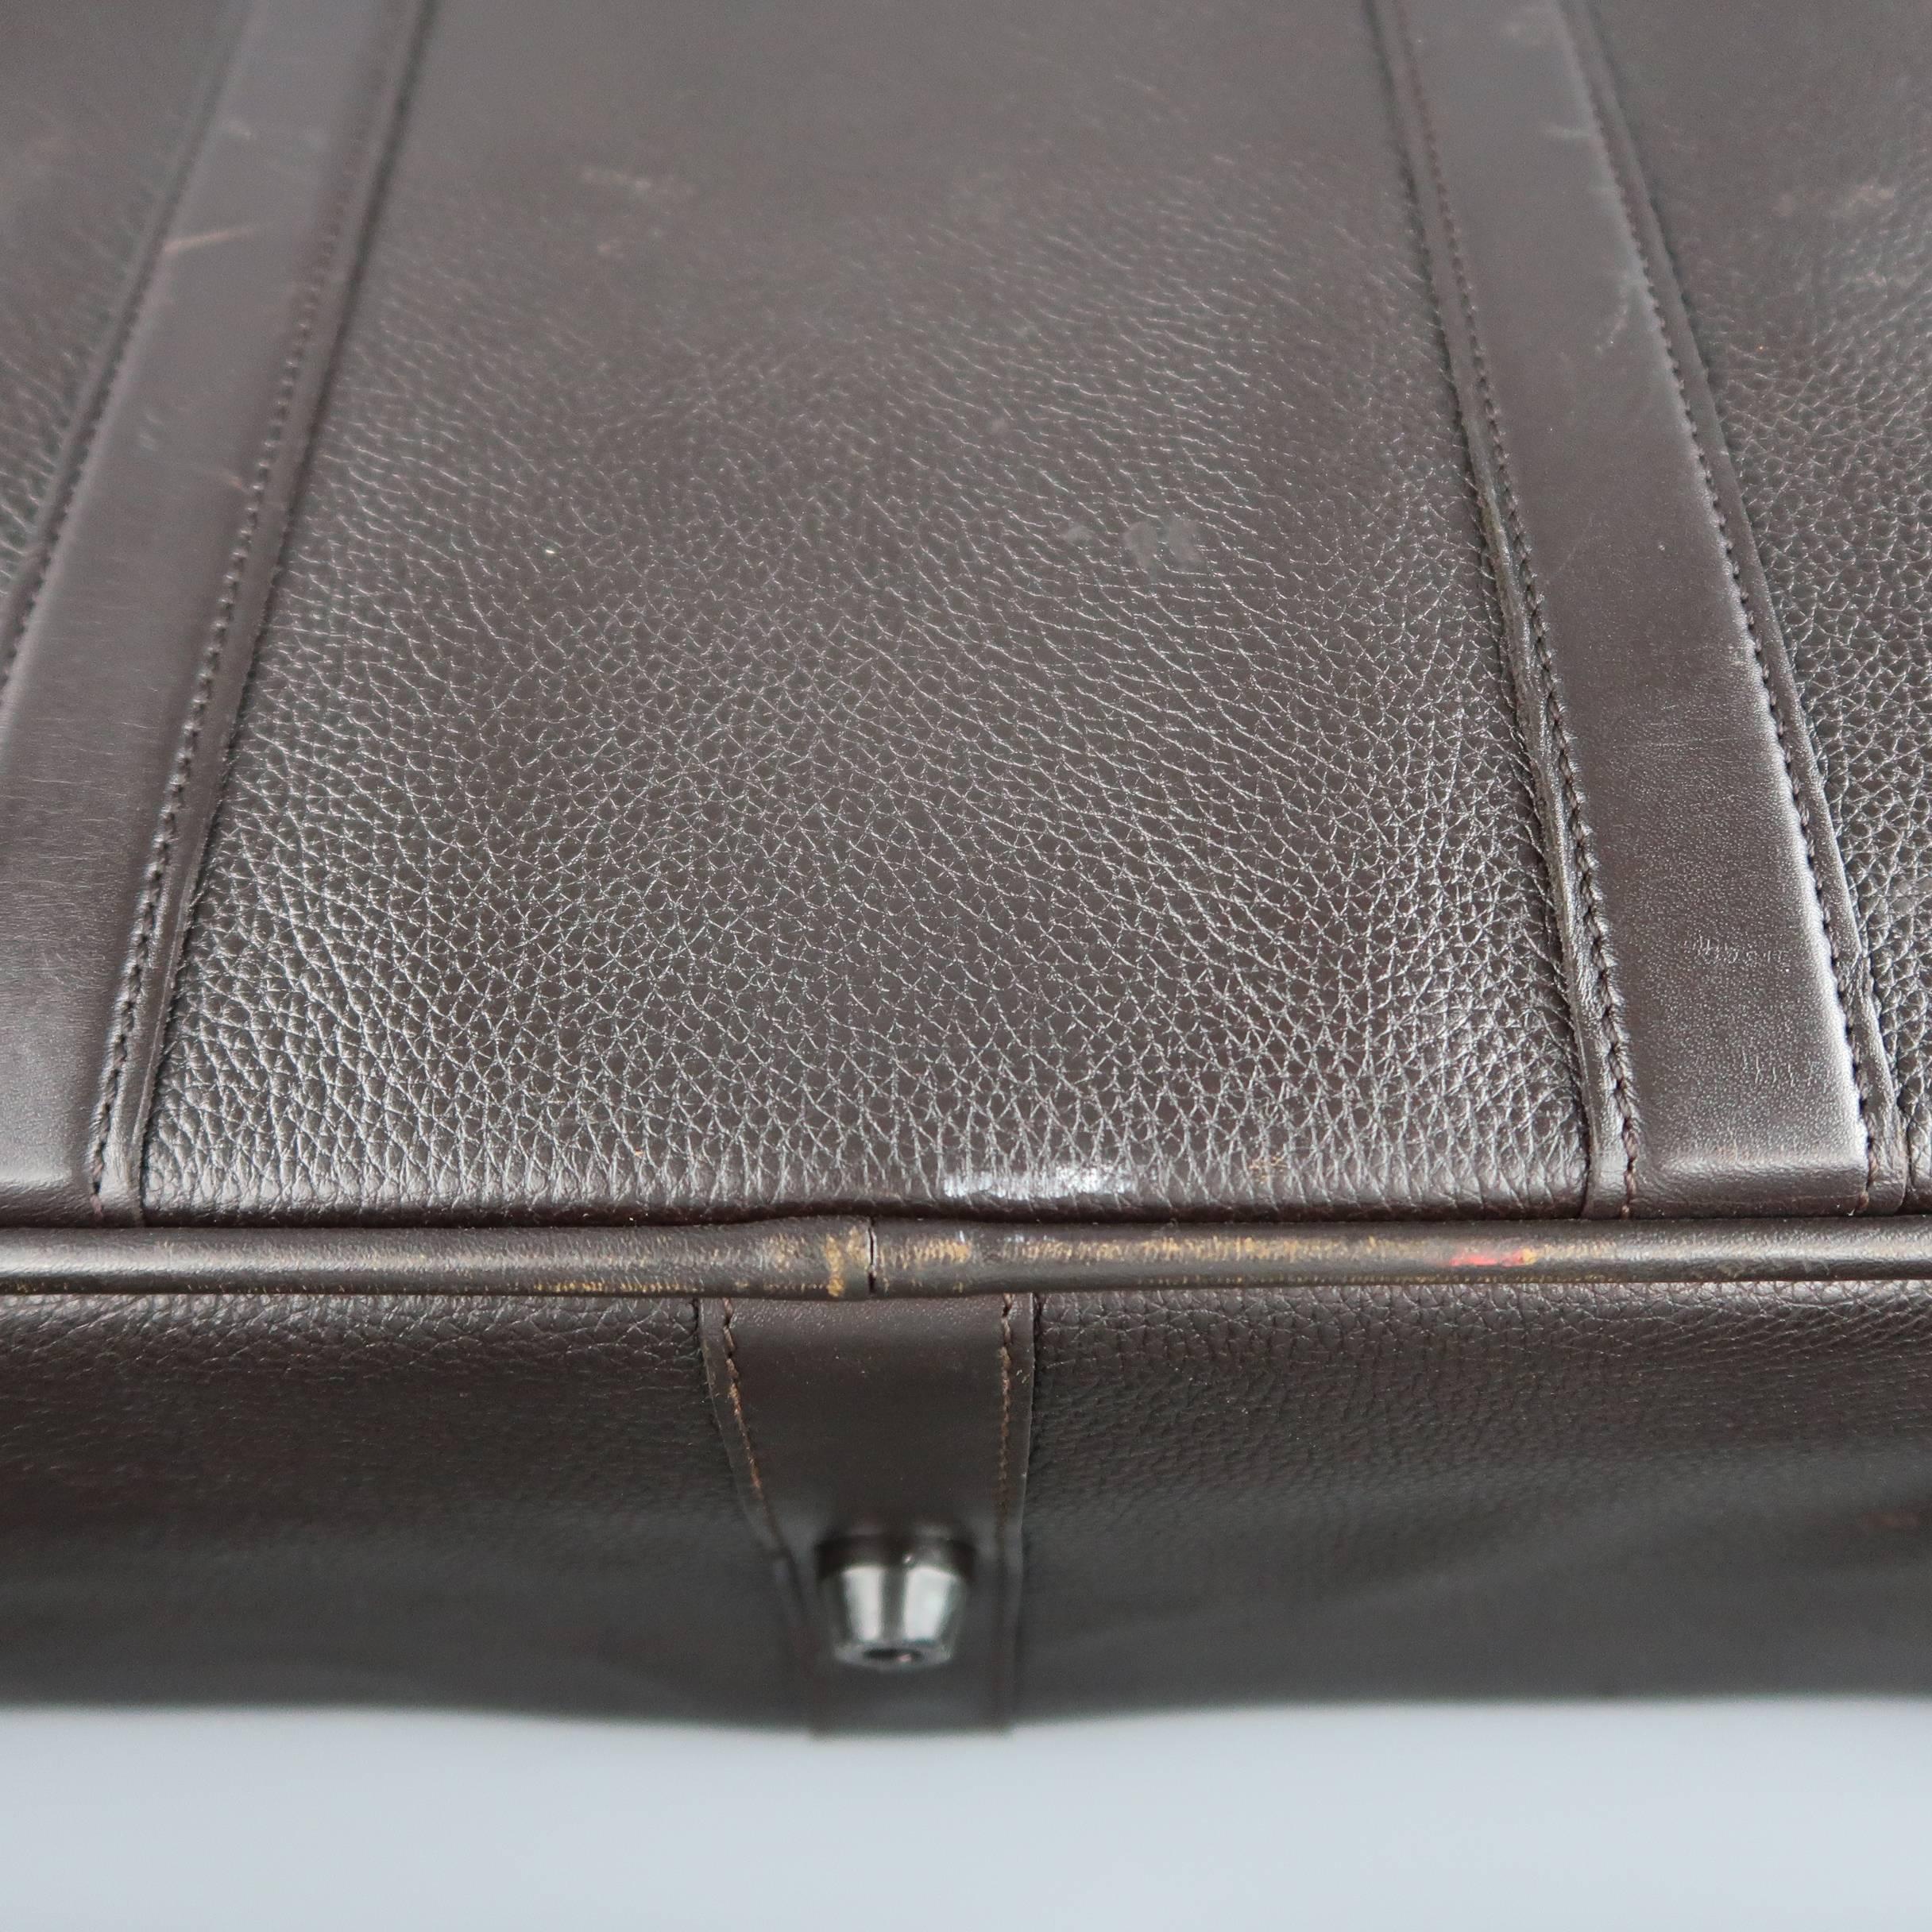 LONGCHAMP Dark Brown Leather Carry On Suitcase Travel Bag im Zustand „Relativ gut“ in San Francisco, CA